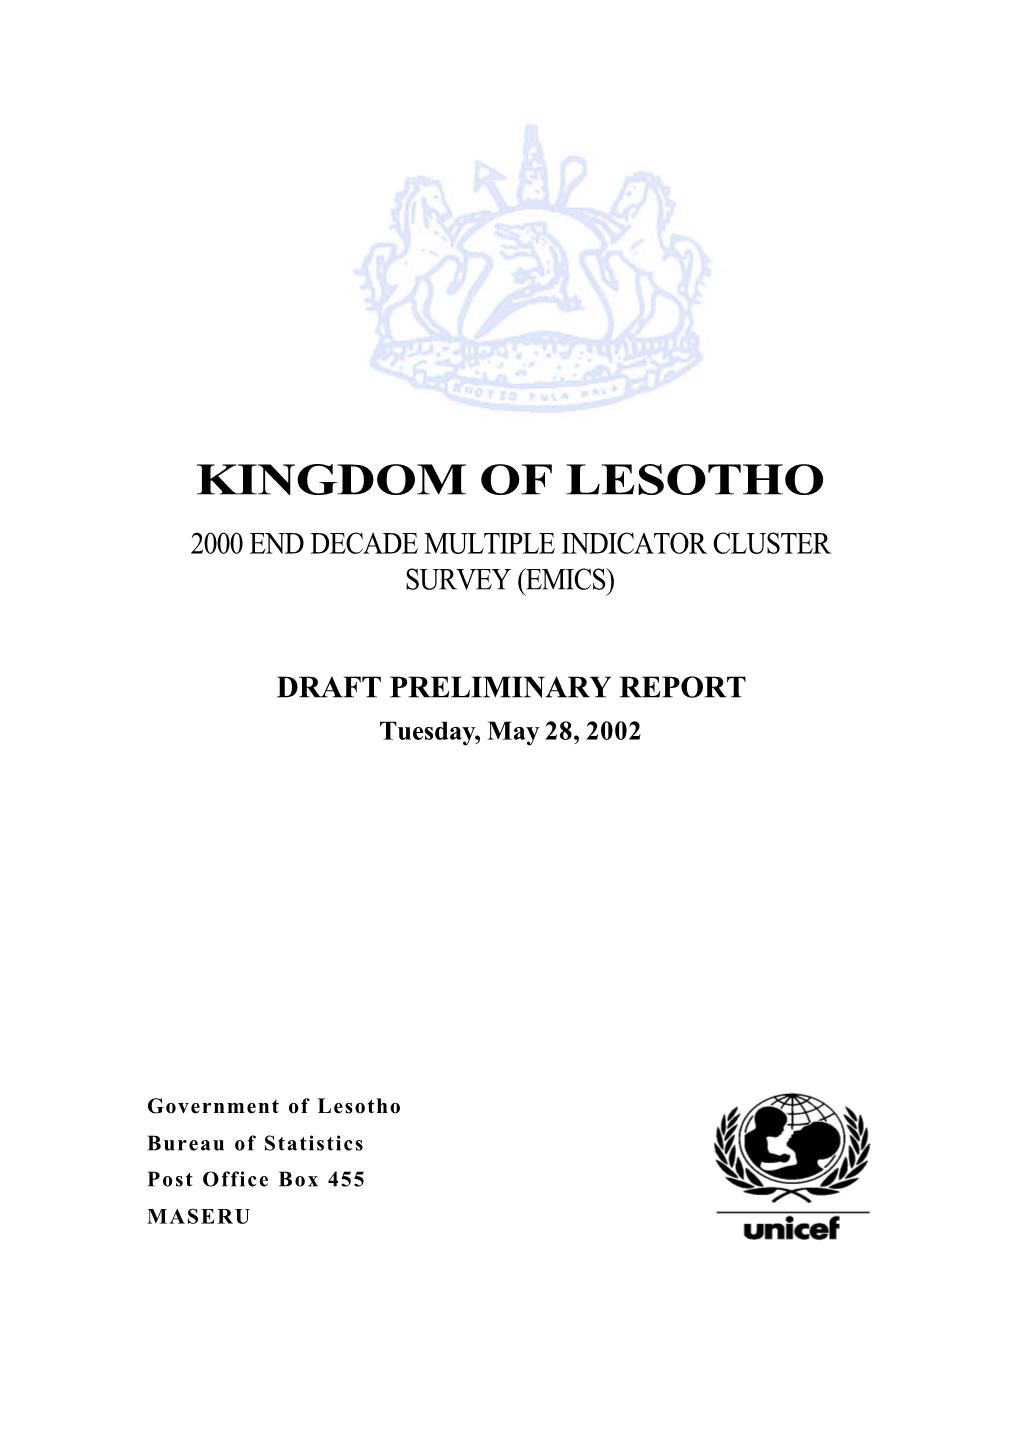 Kingdom of Lesotho 2000 End Decade Multiple Indicator Cluster Survey (Emics)